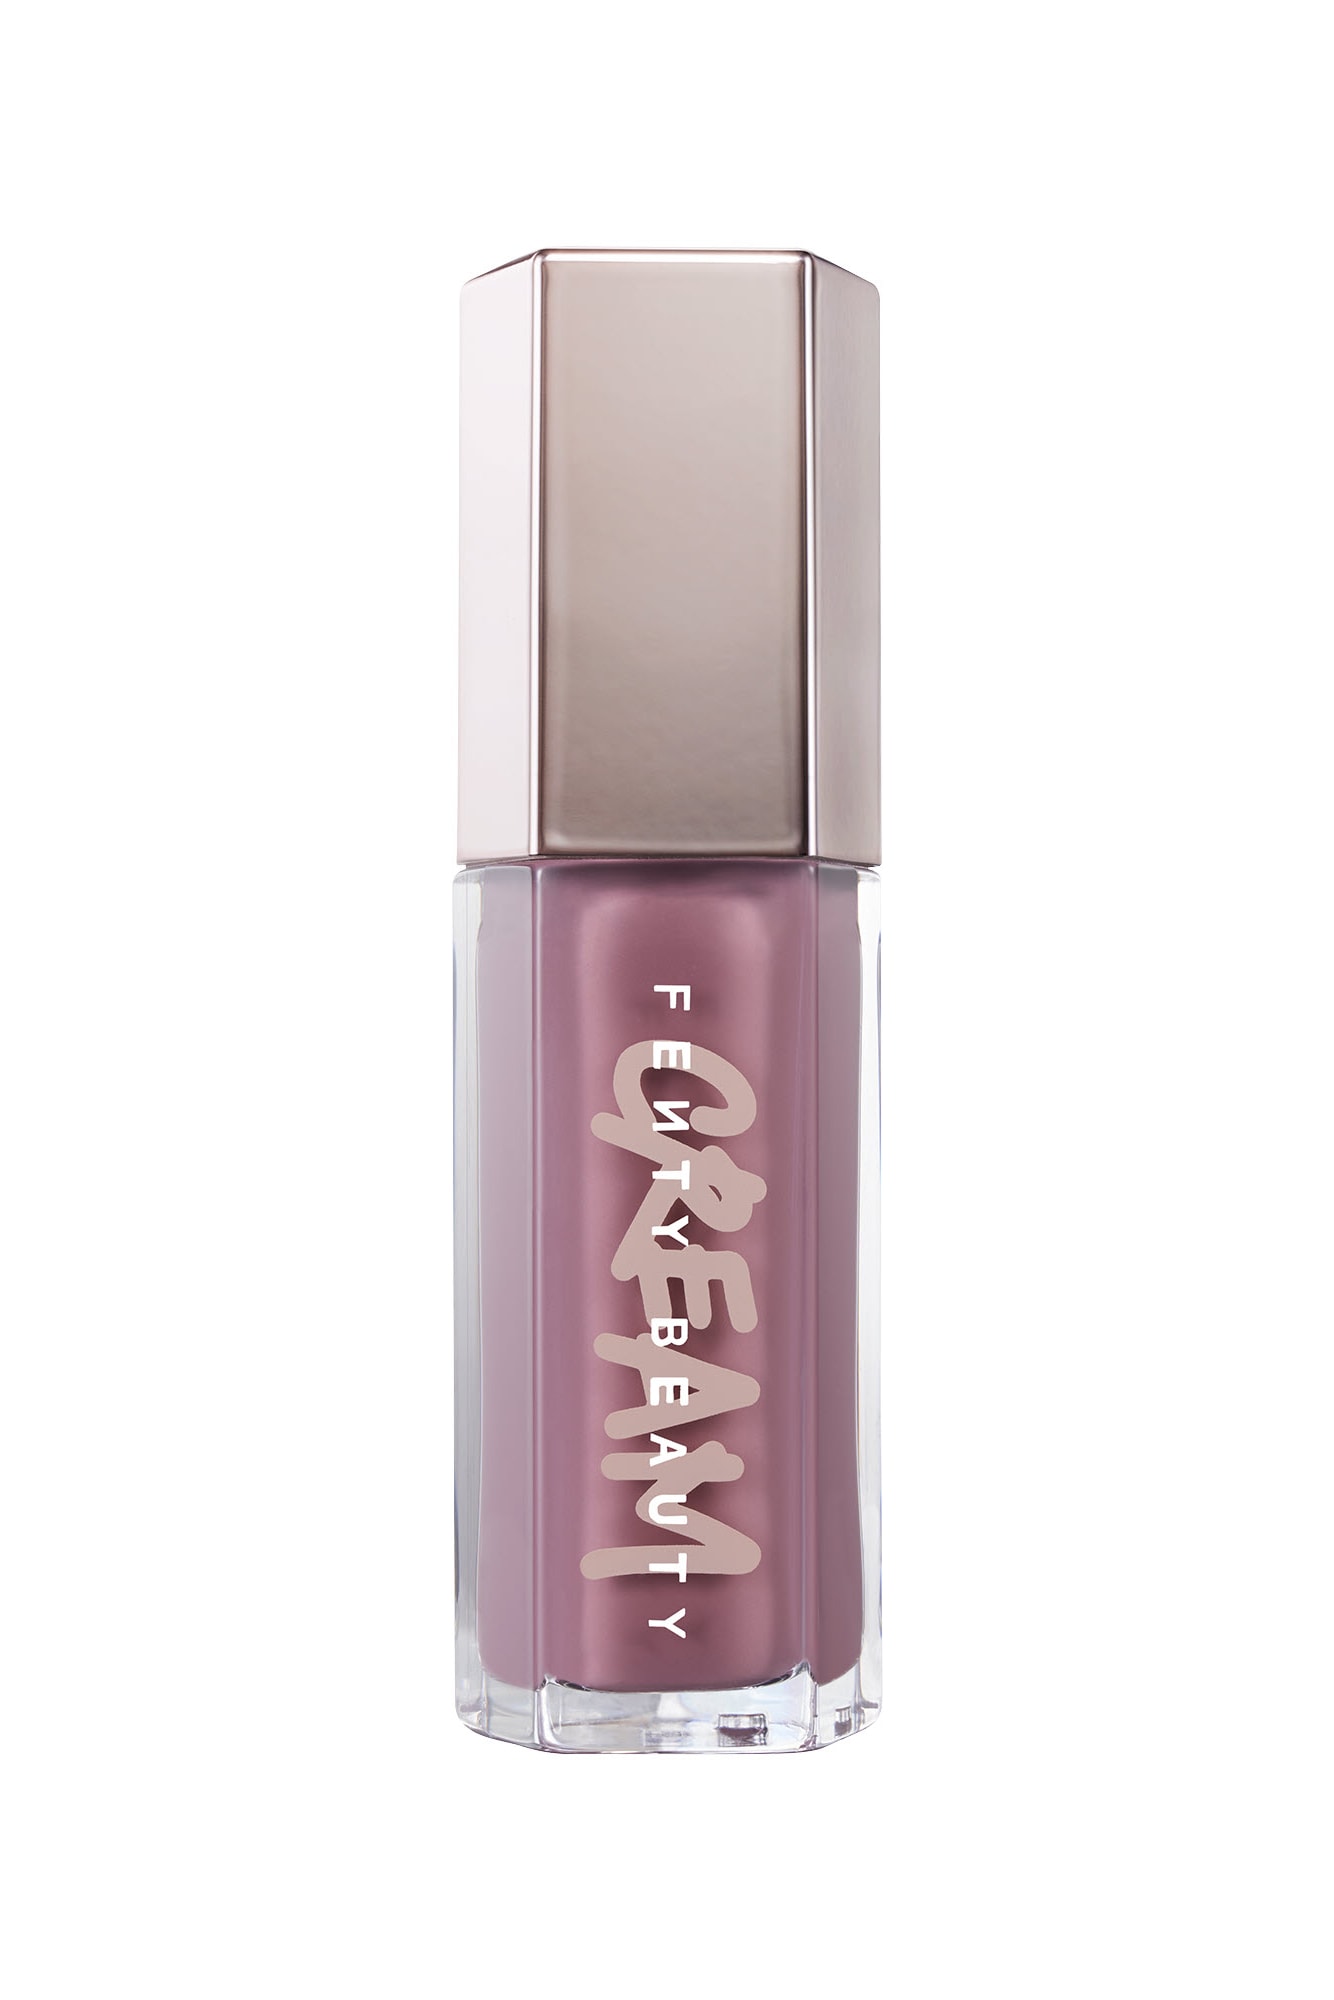 Fenty Beauty Releases Gloss Bomb Cream Color Drip Lip Cream Colors Lipstick Product Rihanna